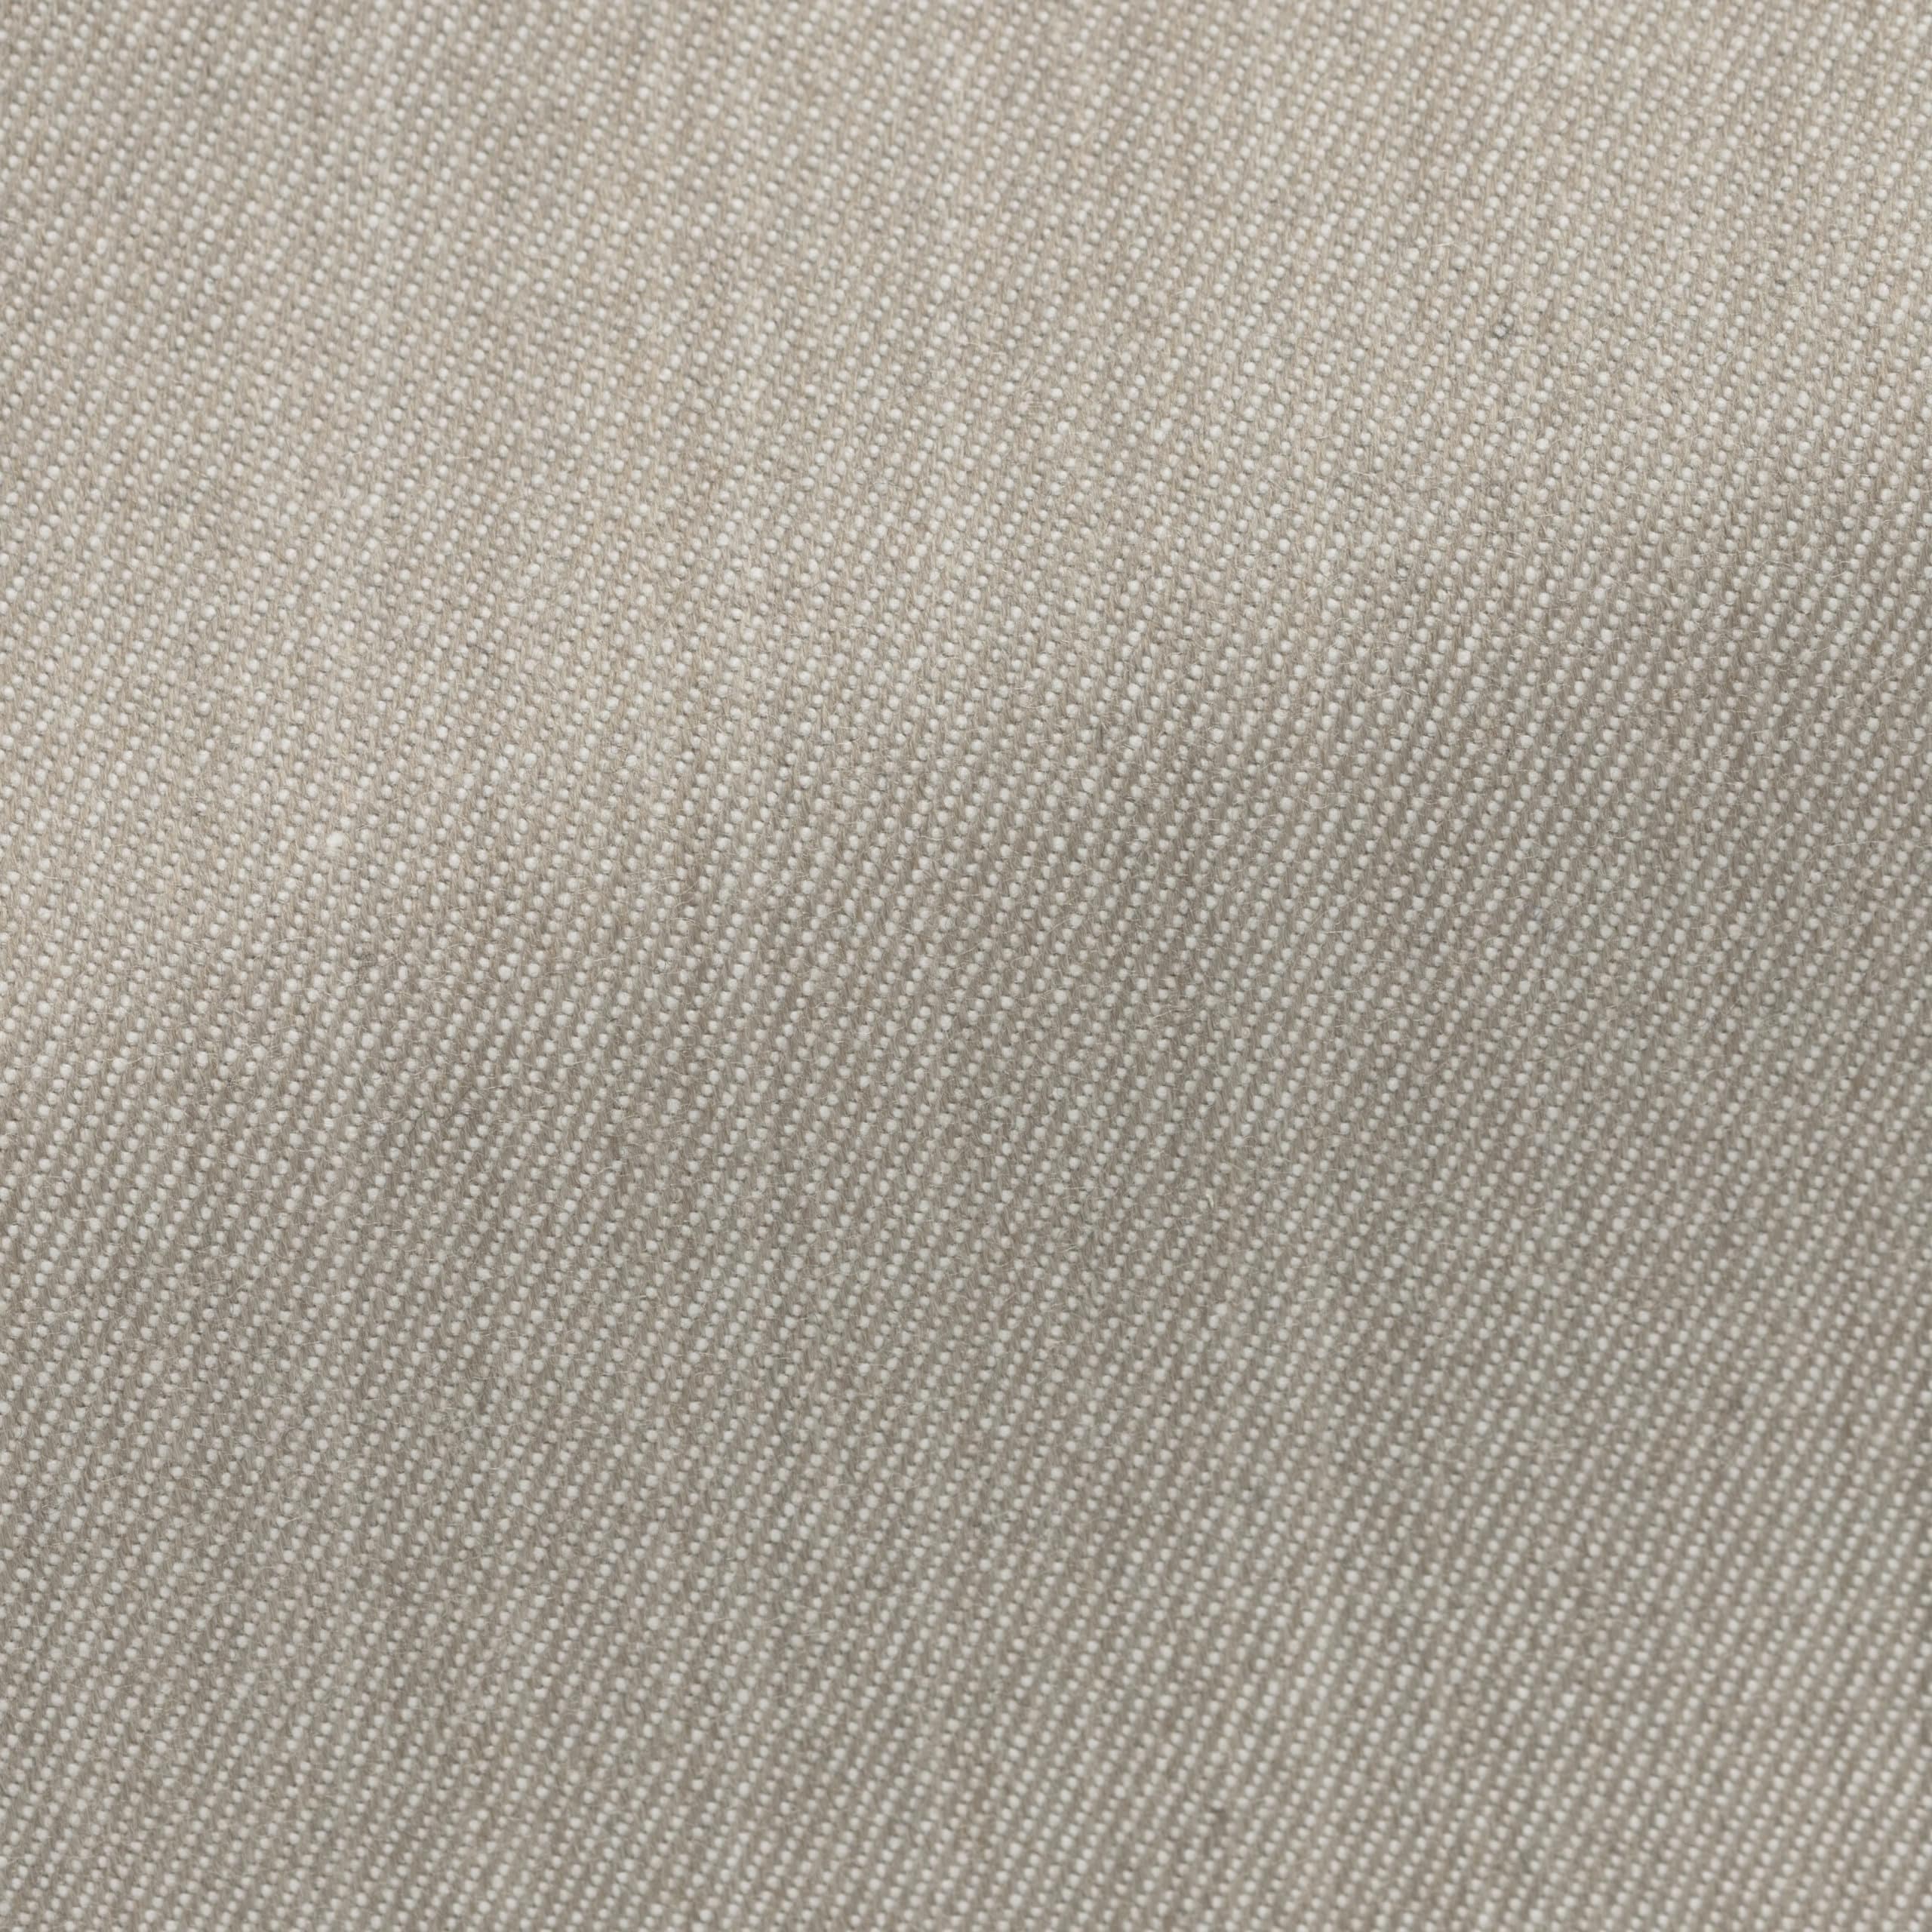 8679 Fabric Sample image 1